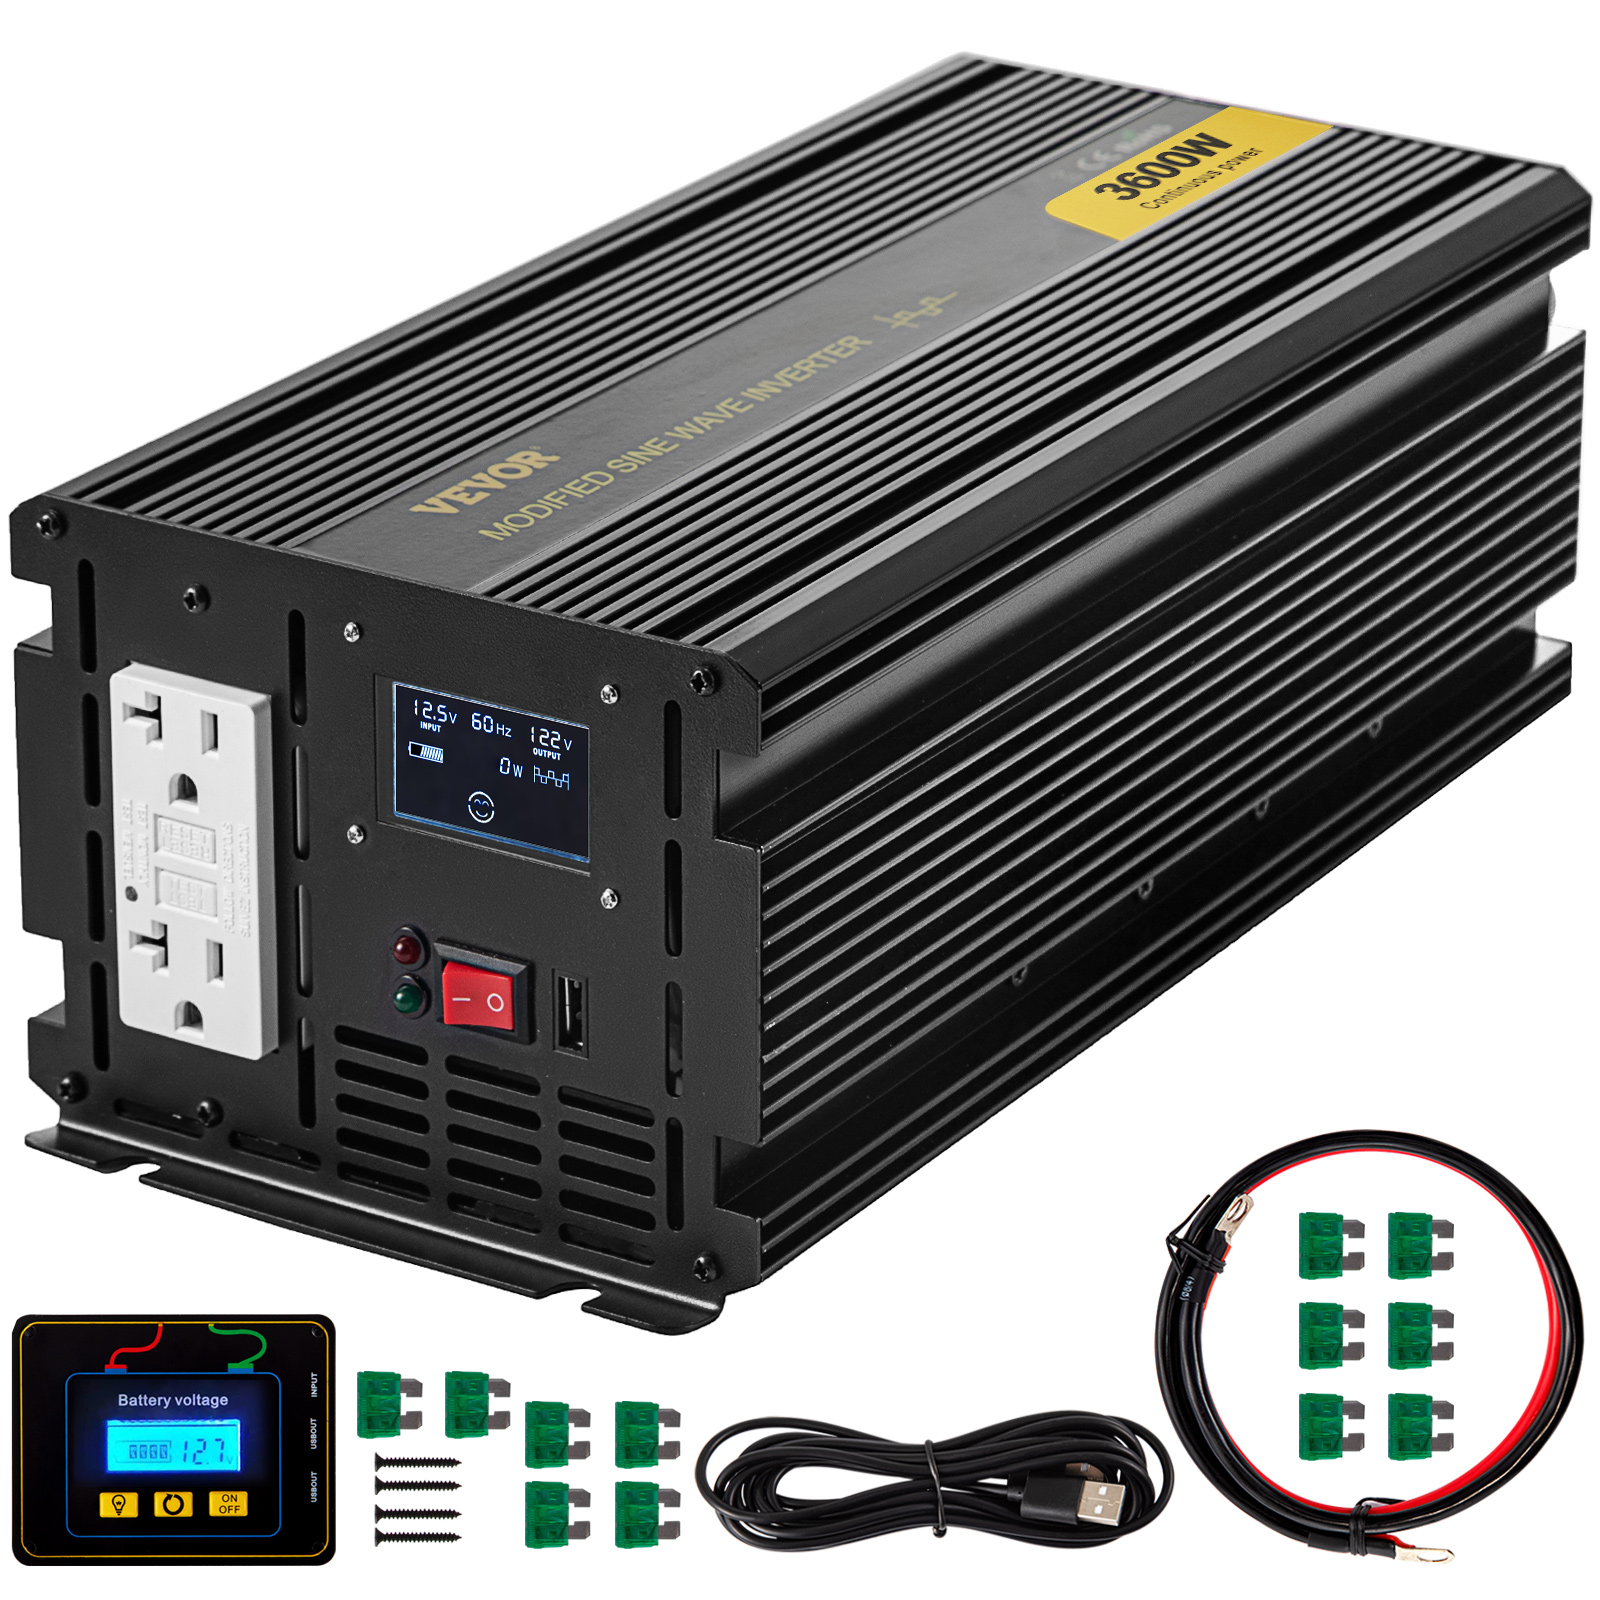 VEVOR Power Inverter, 3600W Modified Sine Wave Inverter, DC 12V to AC 120V Car Converter, with LCD Display, Remote Controller, LED Indicator, GFCI